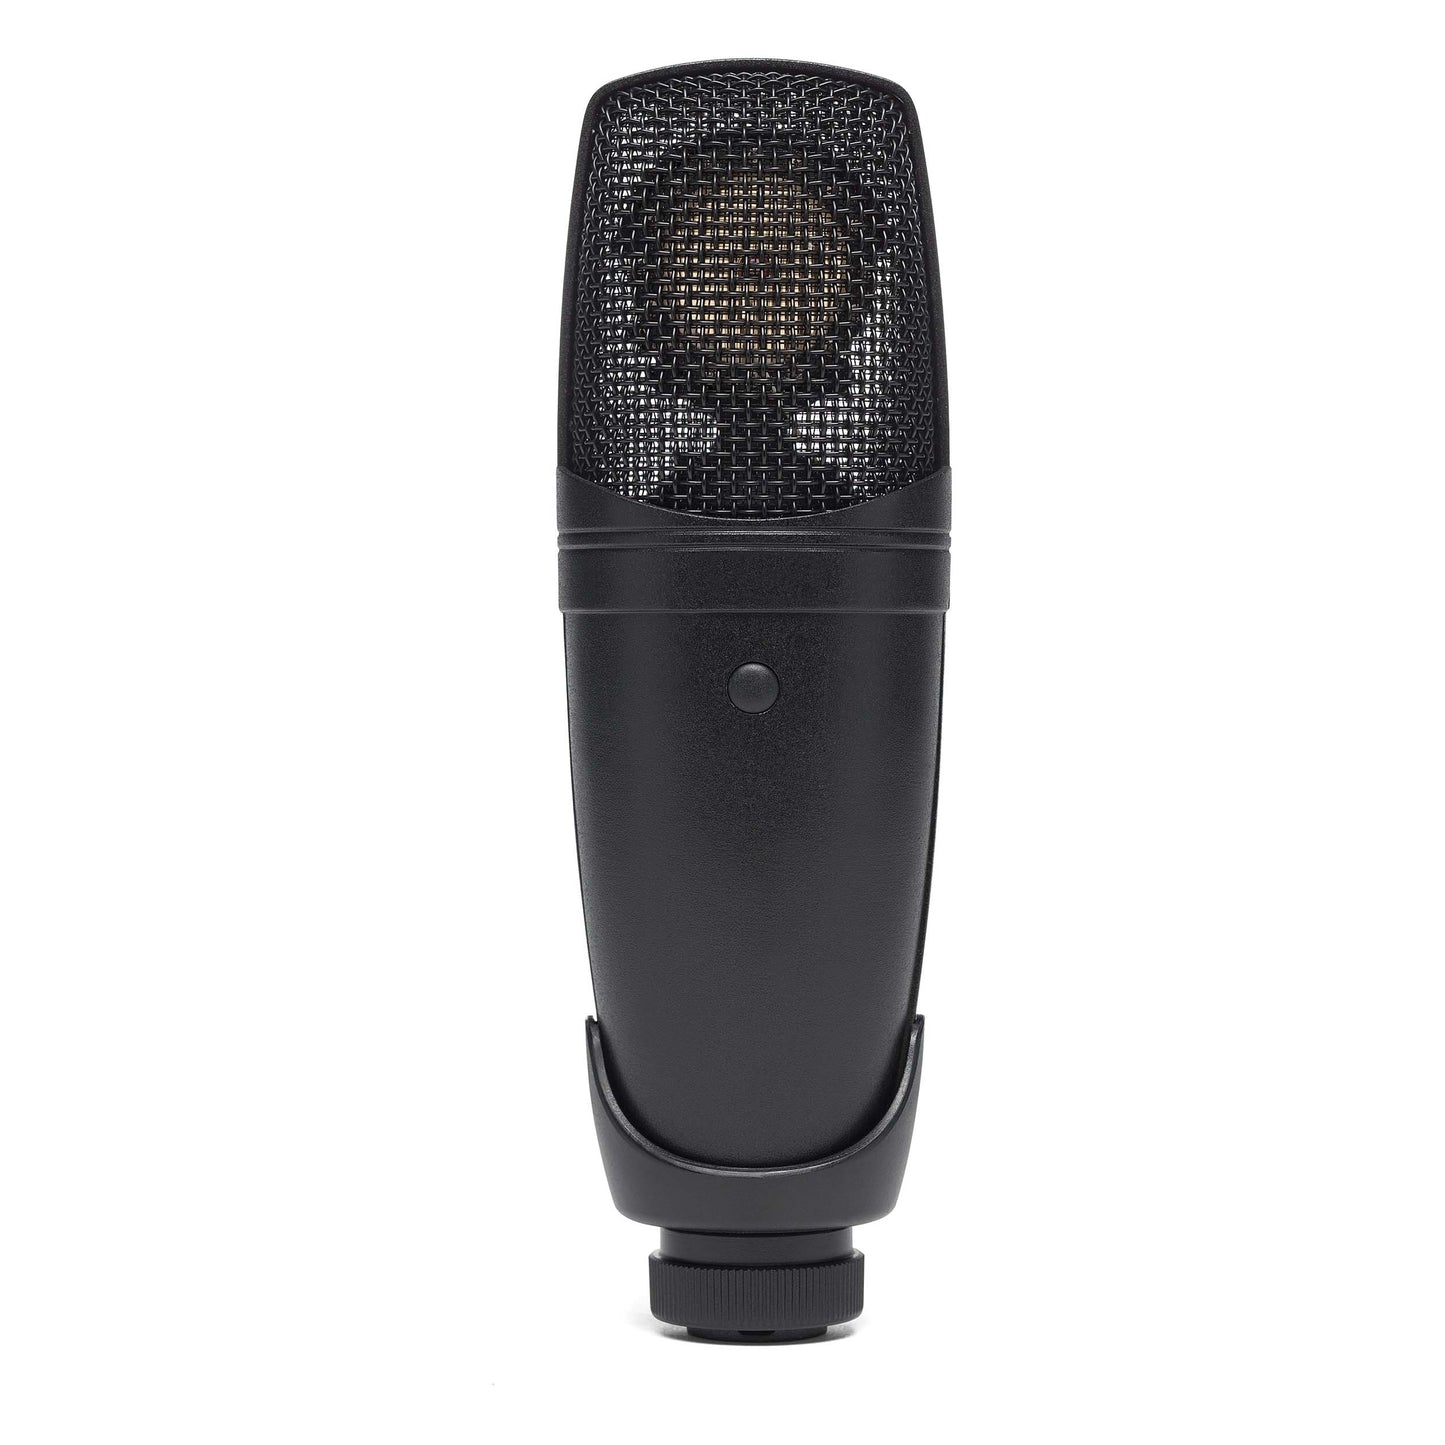 Samson CL7a Large-Diaphragm Studio Condenser Microphone